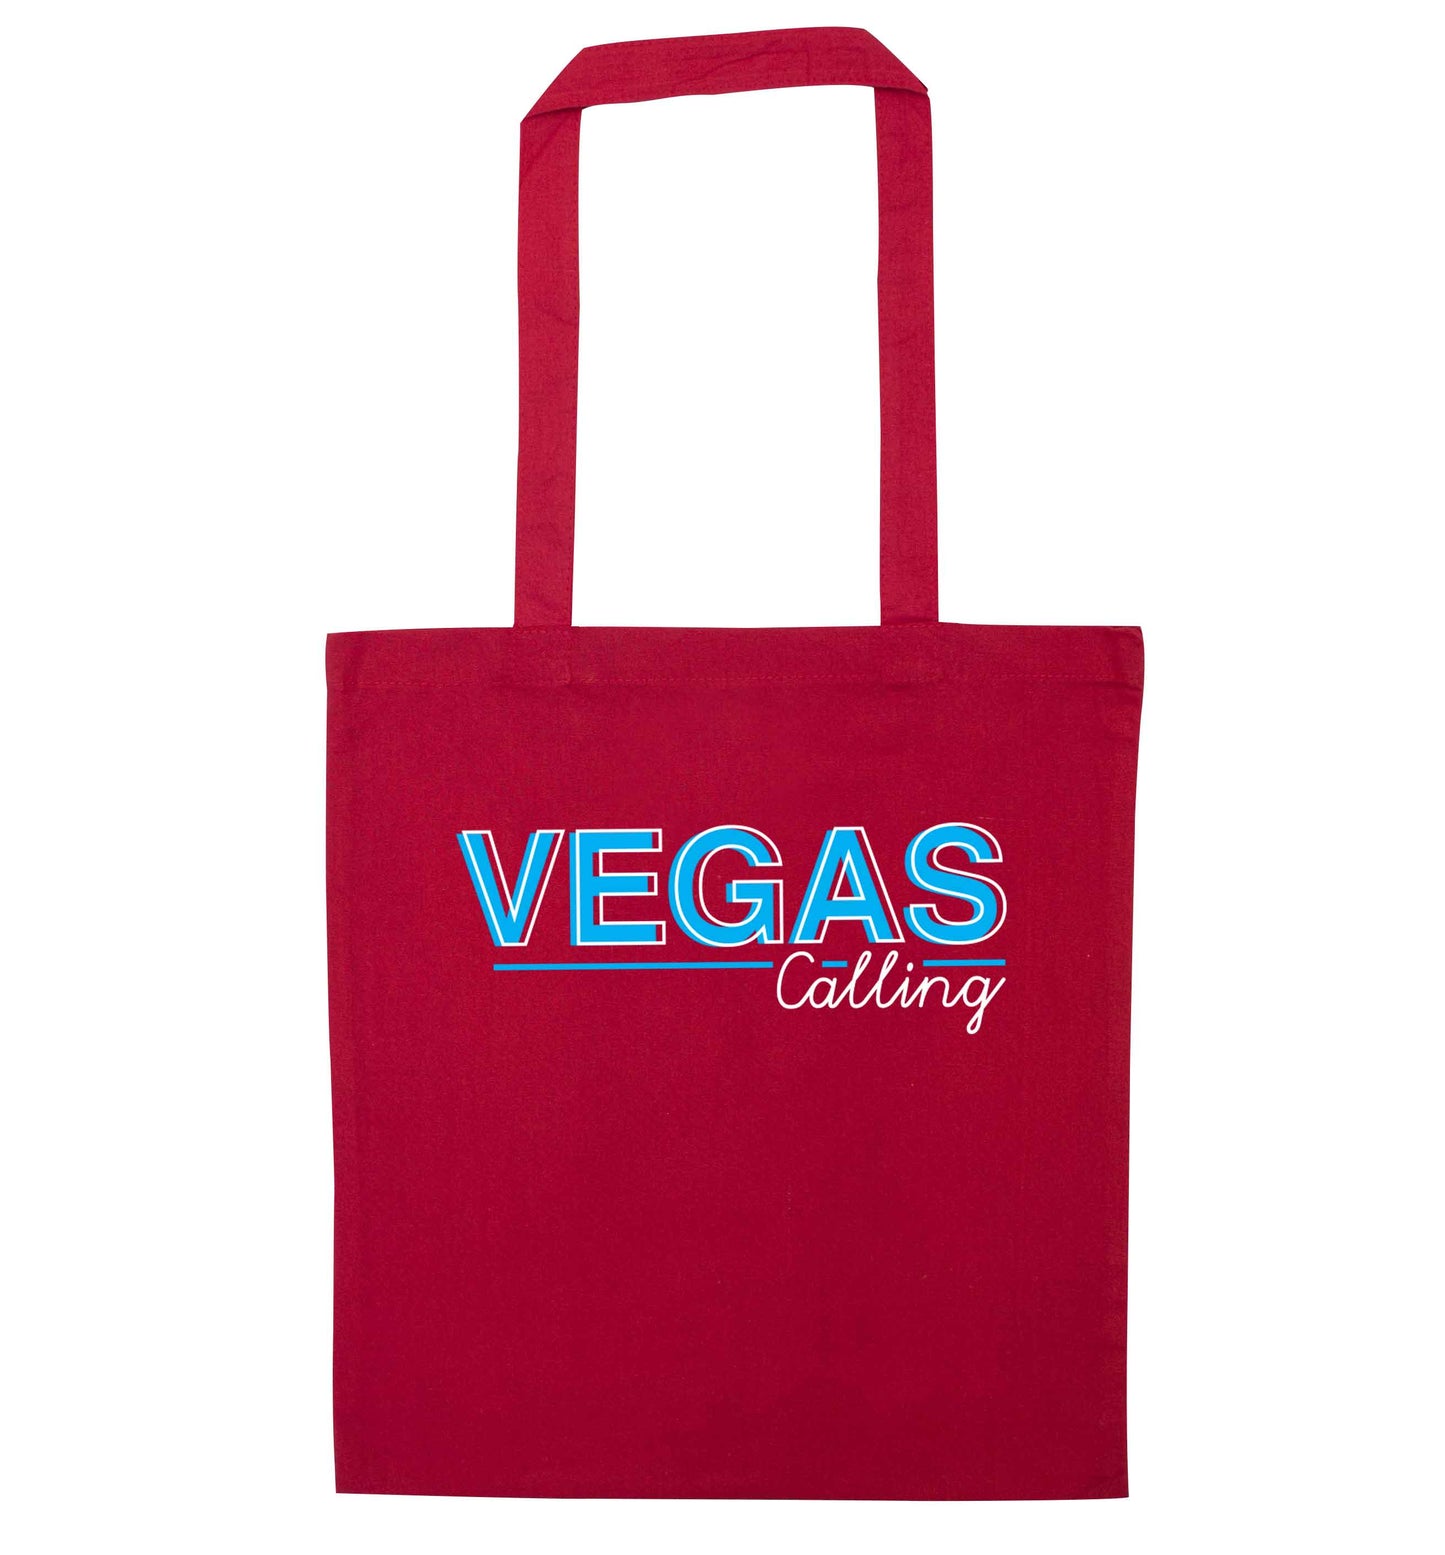 Vegas calling red tote bag